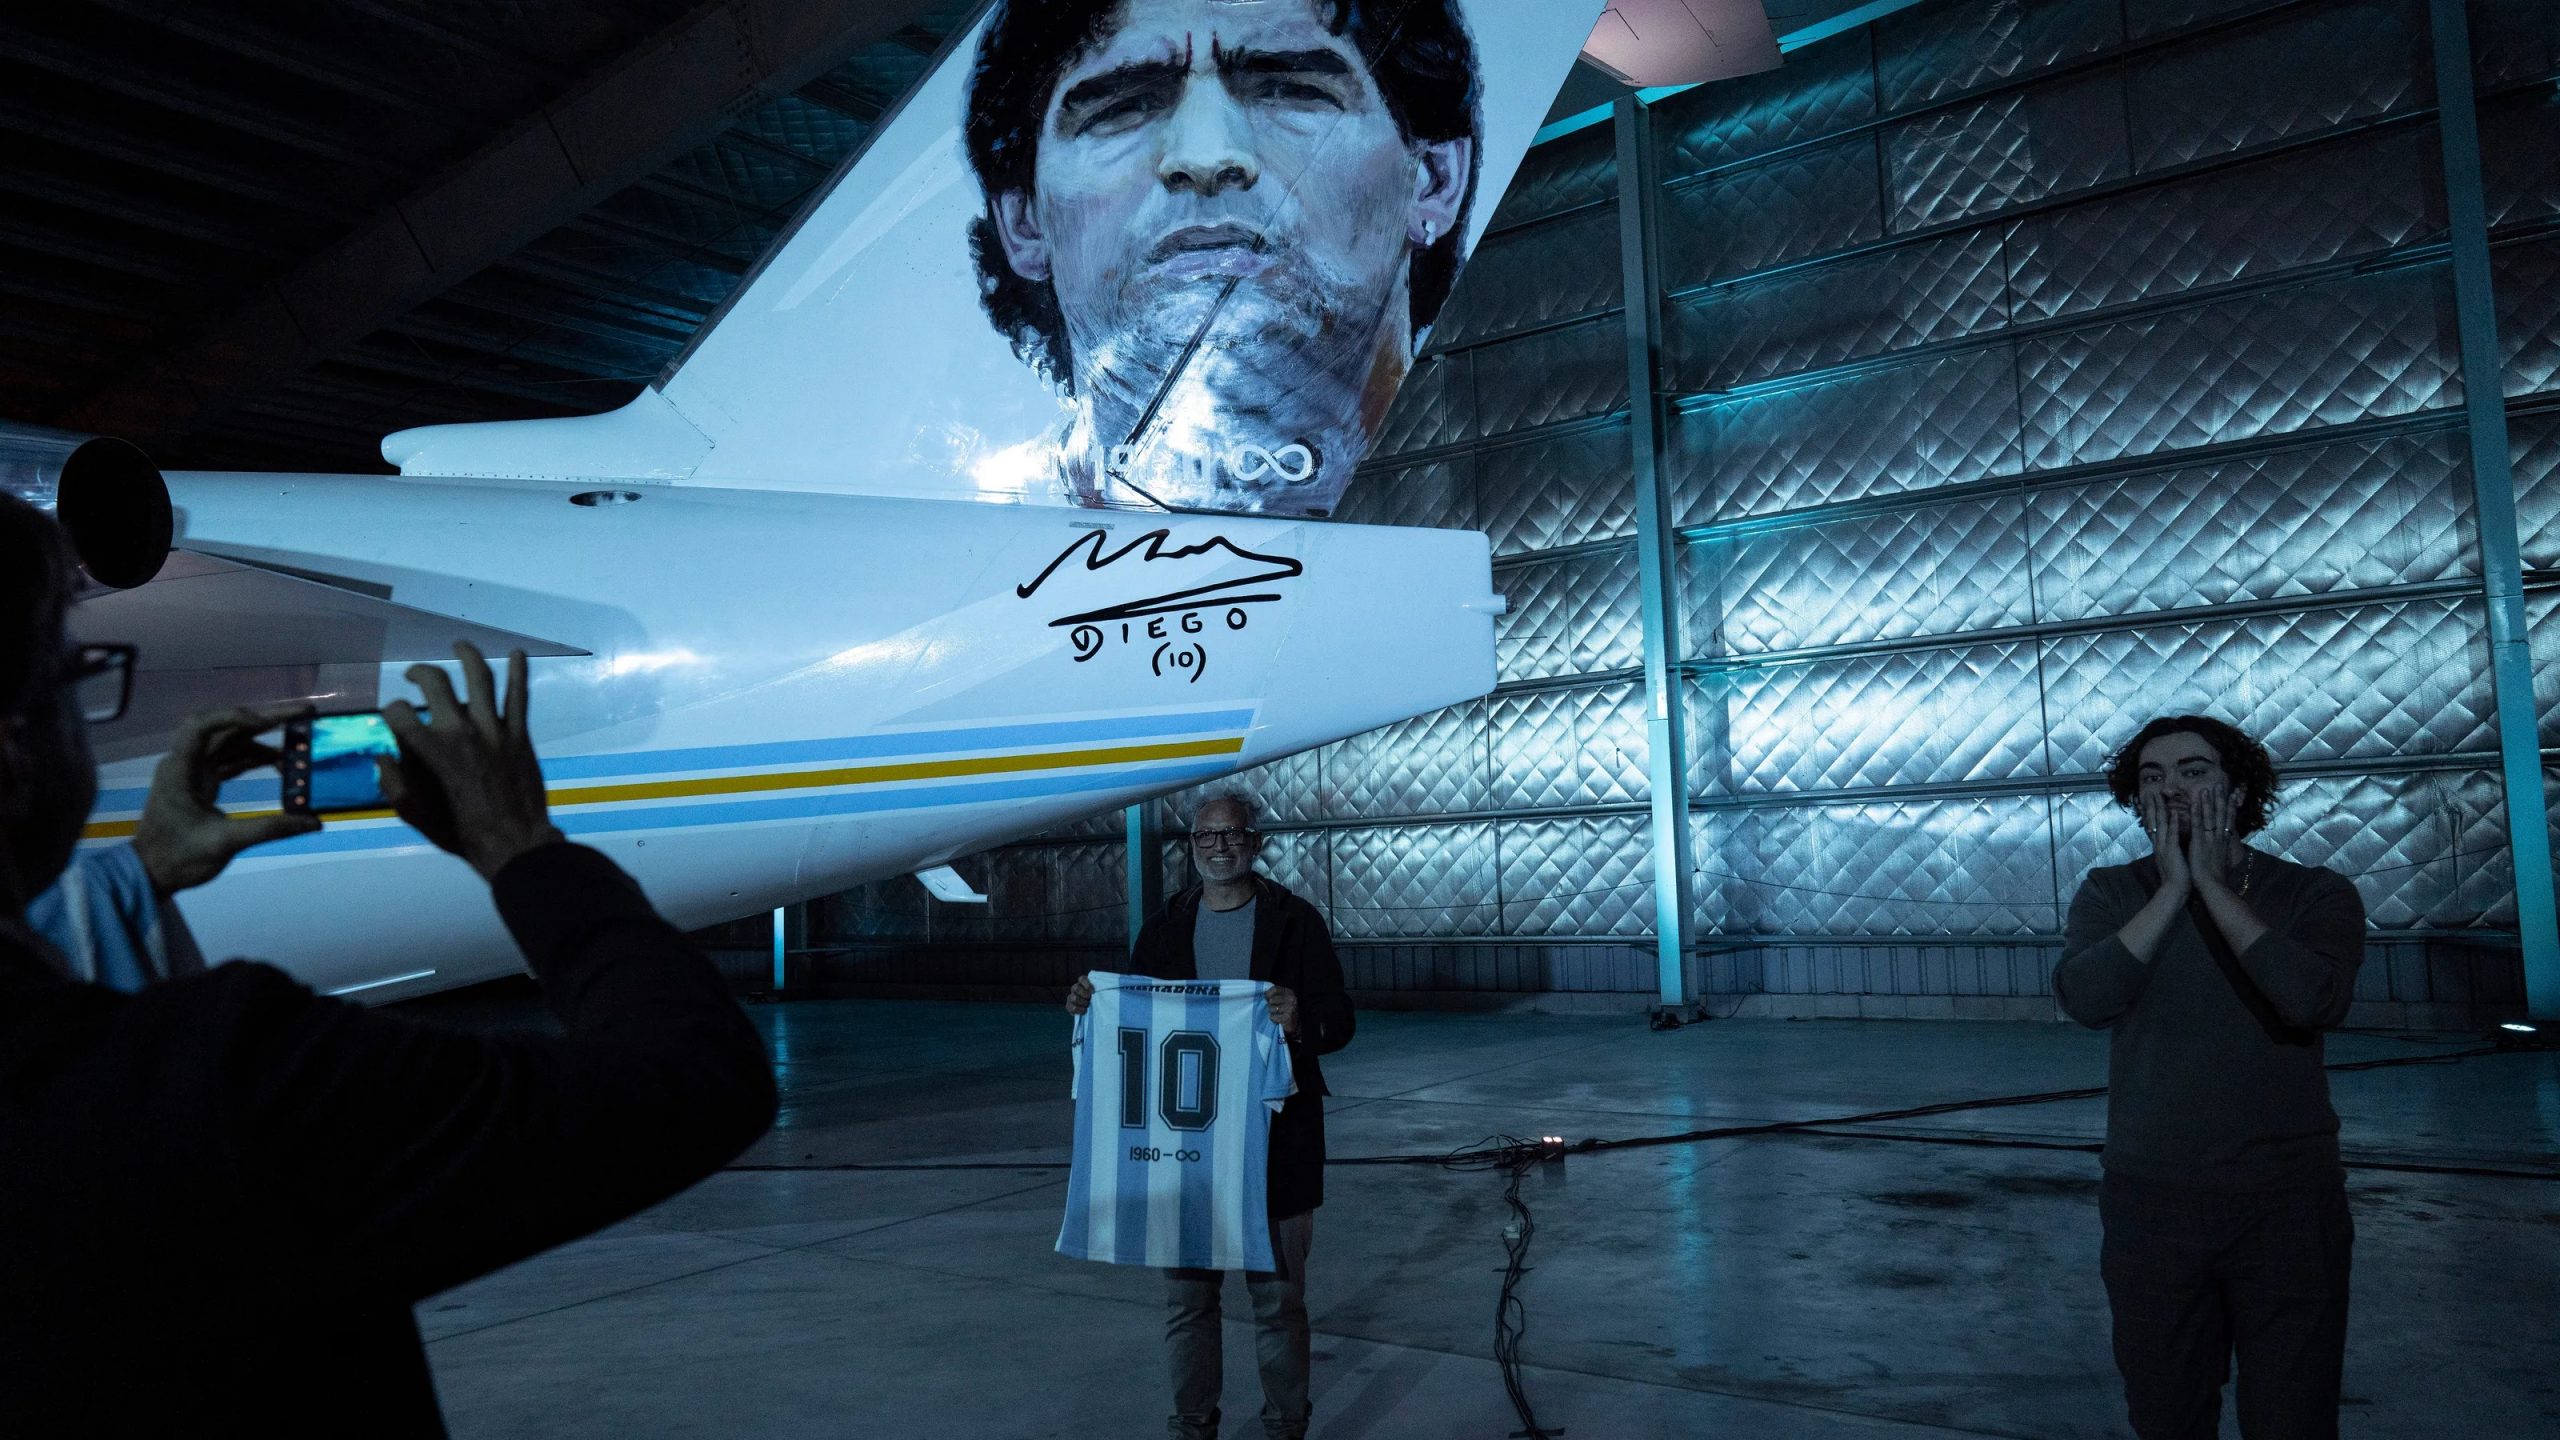 Maradona returns to Qatar 2022 via a private jet with unique technology